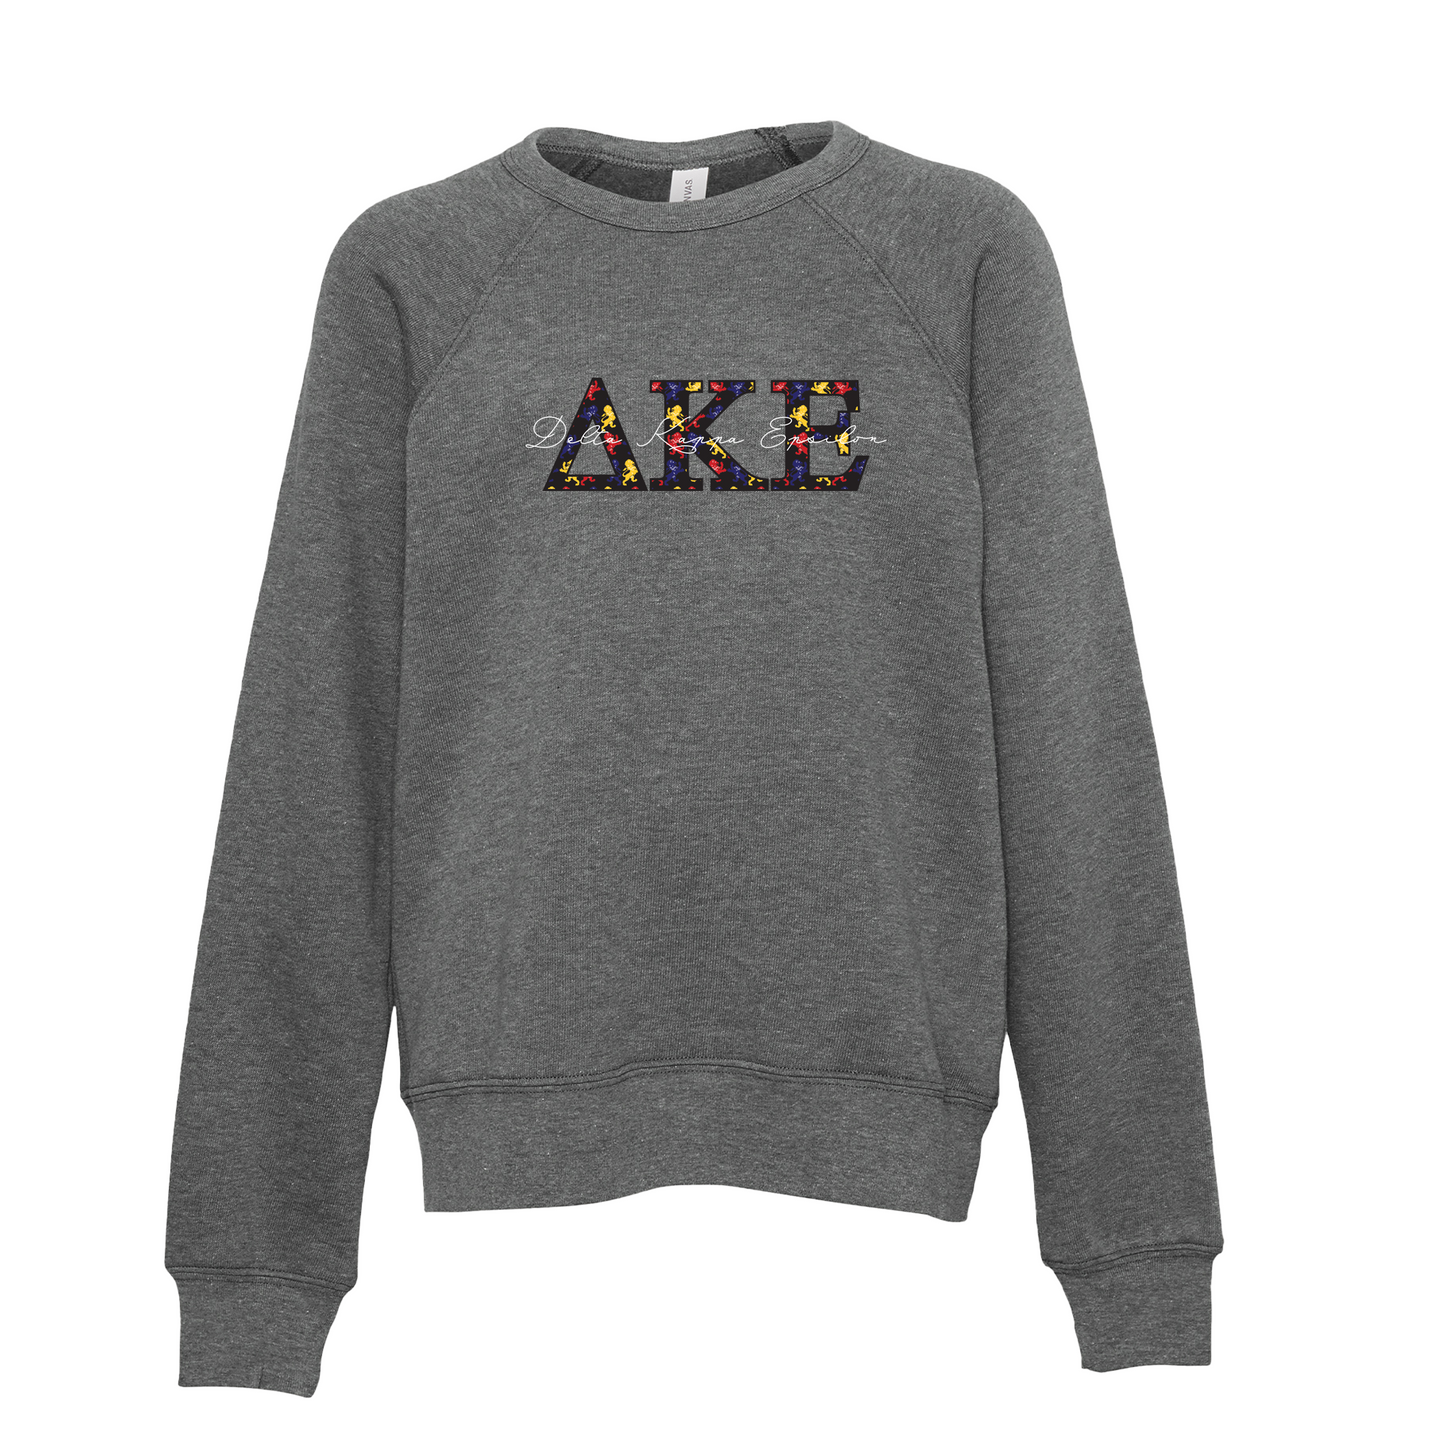 Delta Kappa Epsilon Applique Letters Crewneck Sweatshirt